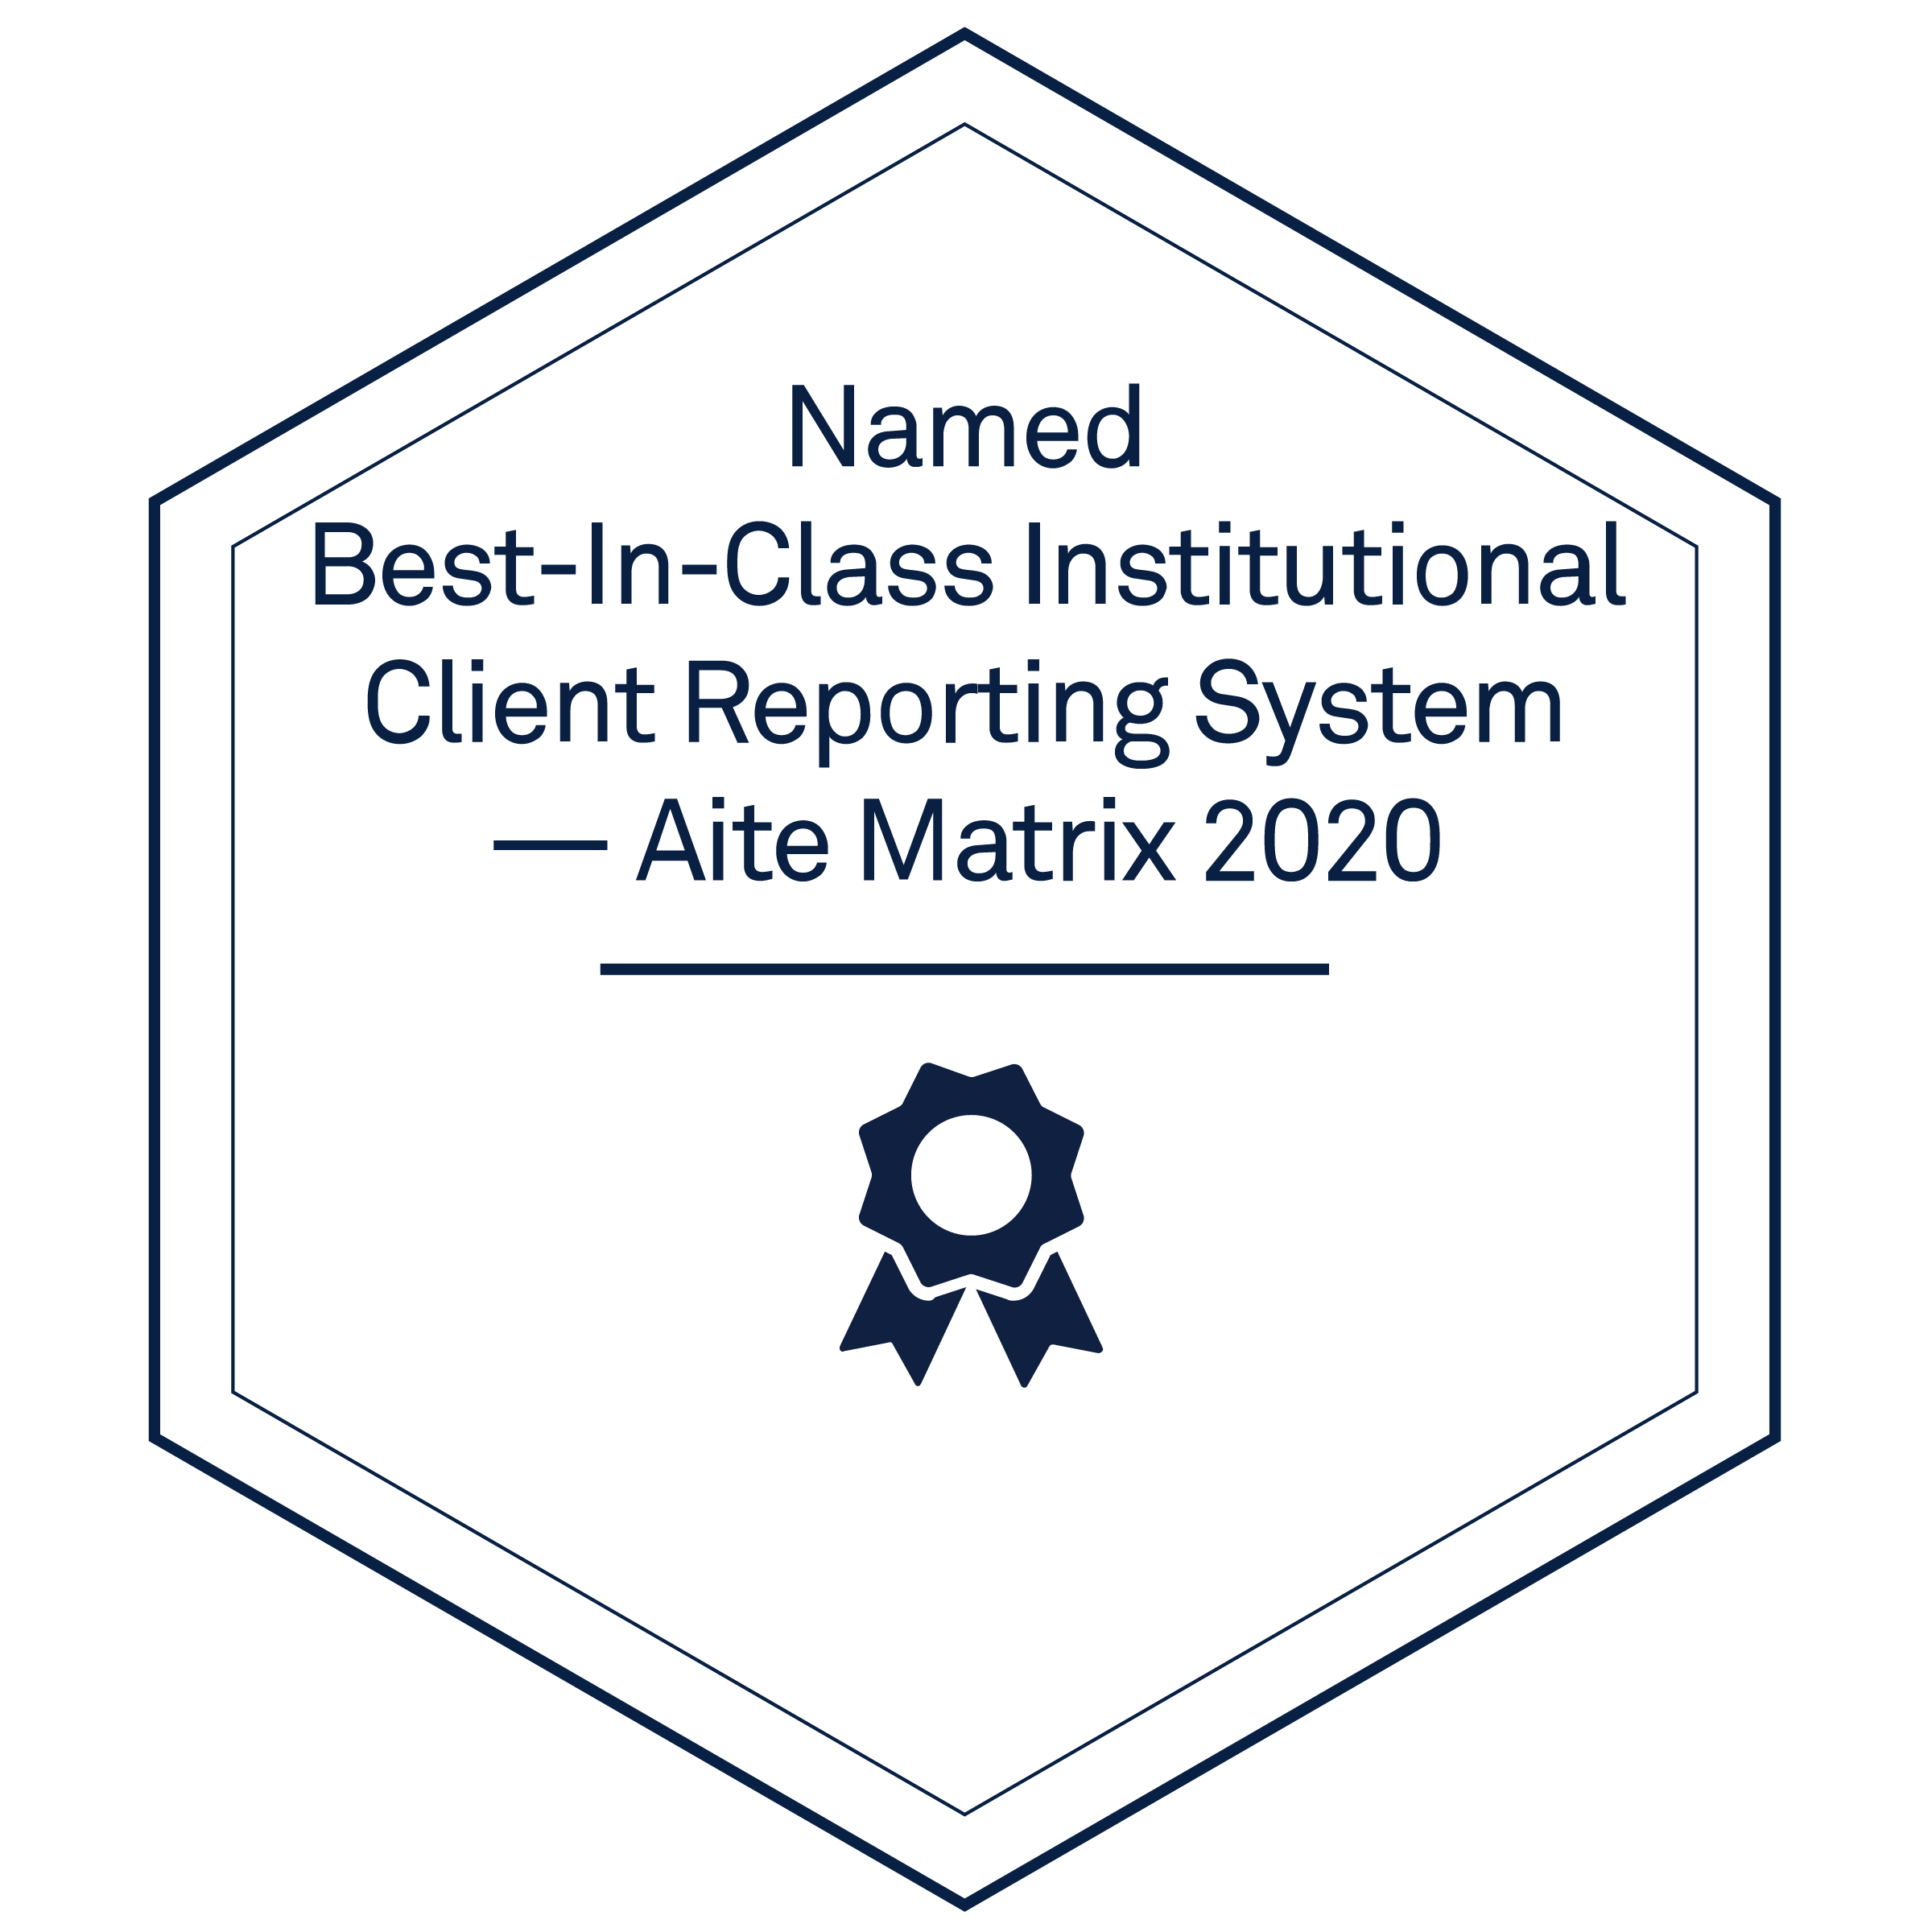 Aite Matrix Client Reporting Platforms – Best-In-Class 2020 Award (Midnight)